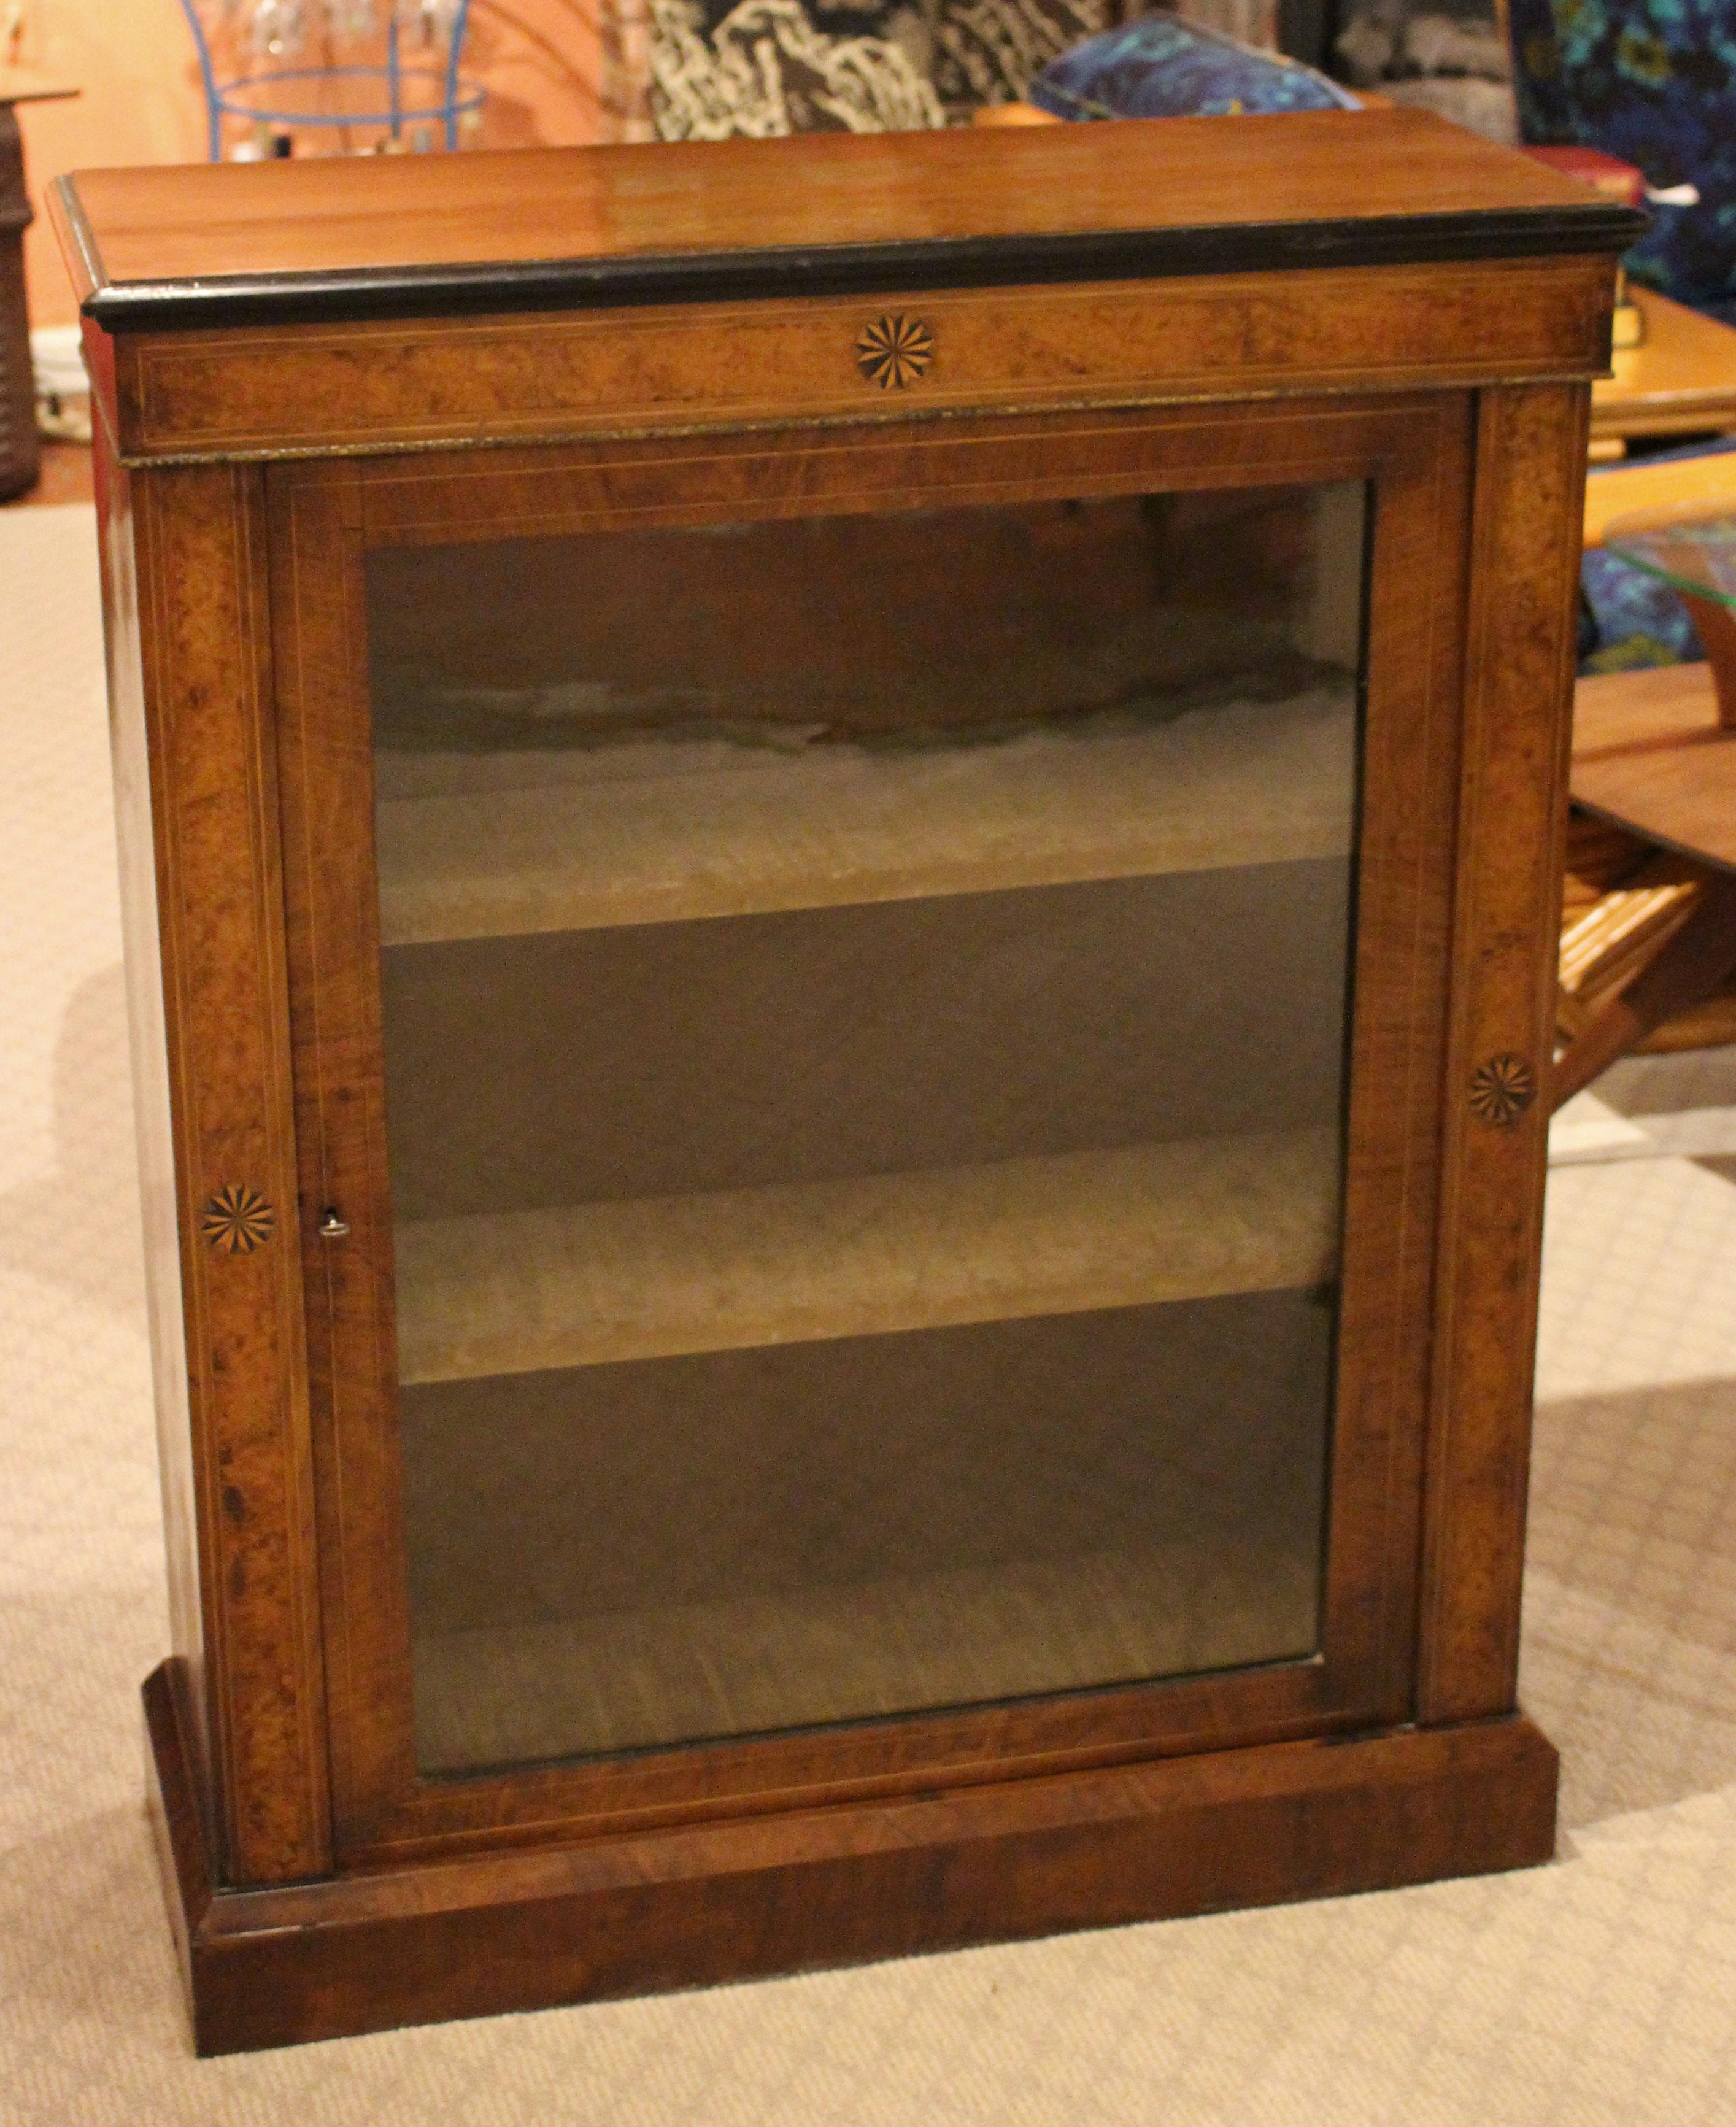 Inlay Circa 1870 English Cabinet or Bookcase